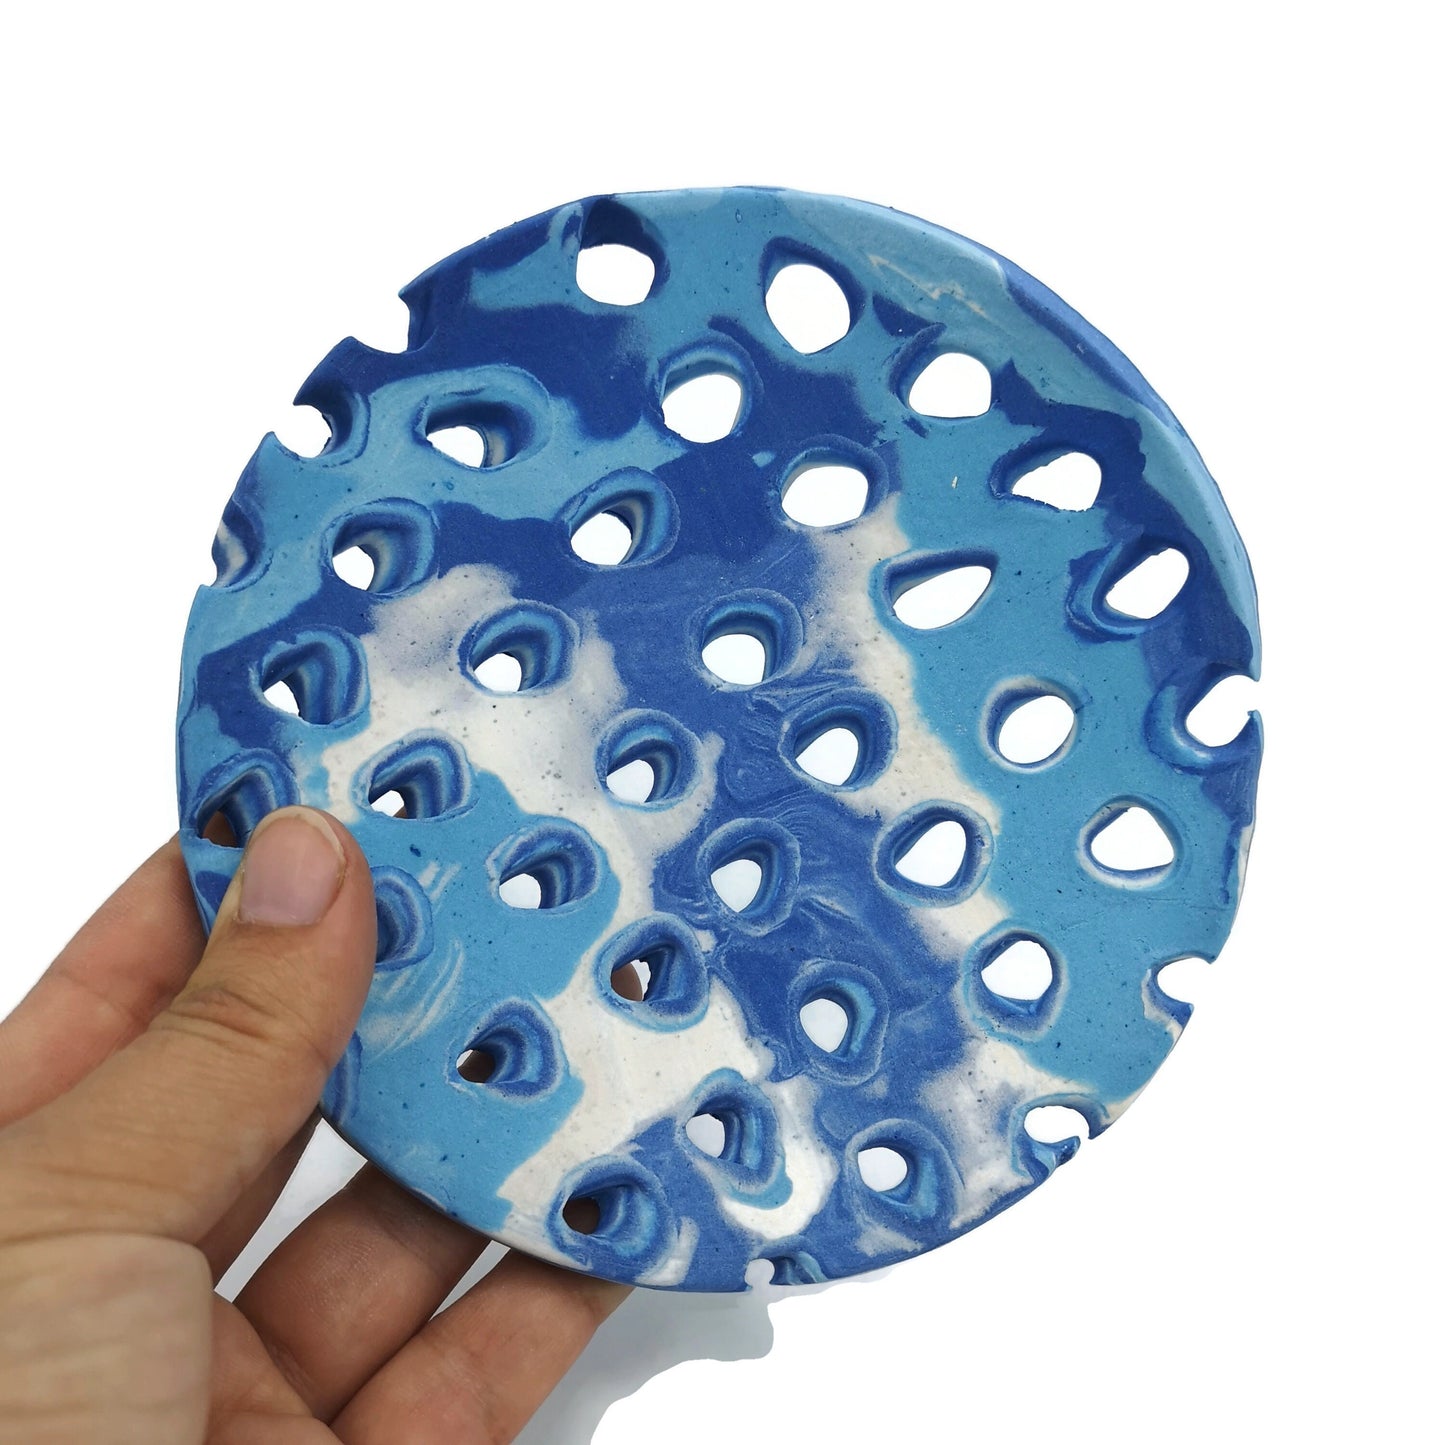 Handmade Ceramic Soap Dish Self Draining, Matte Blue Pottery Soap Bar Holder, Eco-Friendly Products, Shampoo or Sponge Holder for Bathroom - Ceramica Ana Rafael